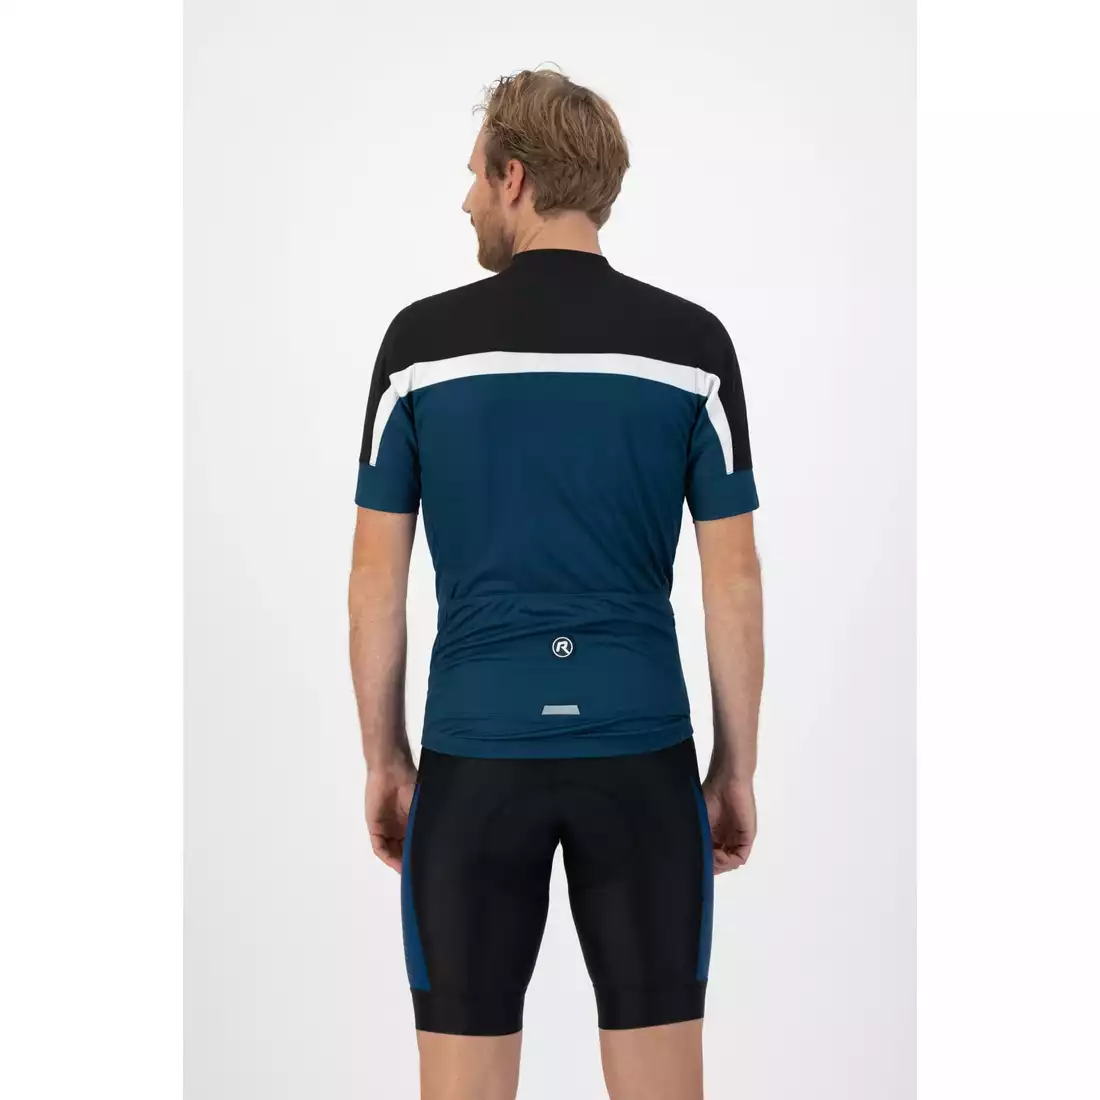 Rogelli COURSE pánský cyklistický dres, černá a tmavě modrá